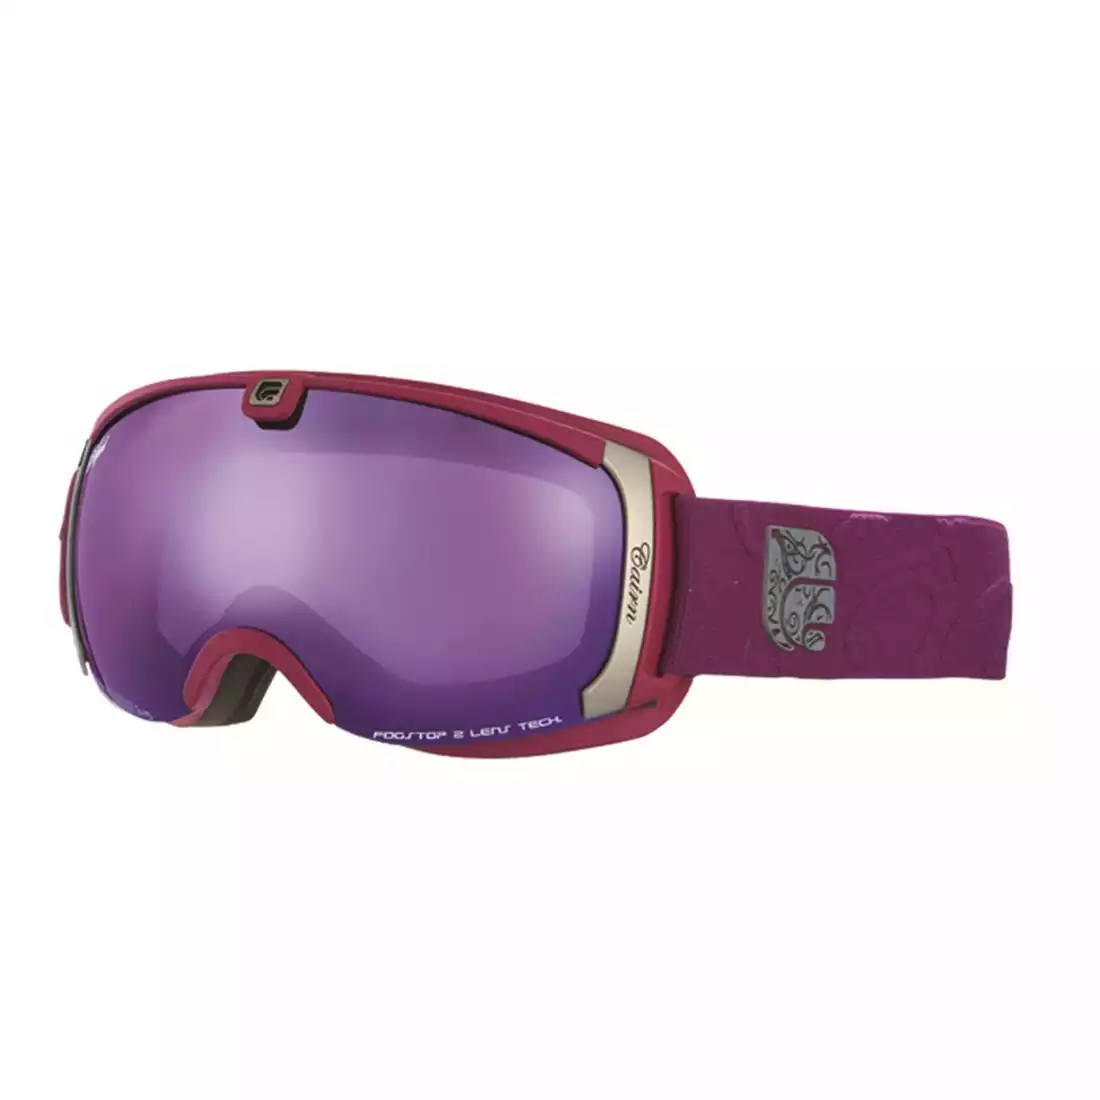 CAIRN gogle narciarskie/snowboardowe PEARL SPX3000 IUM 8143, purple, 5807618143